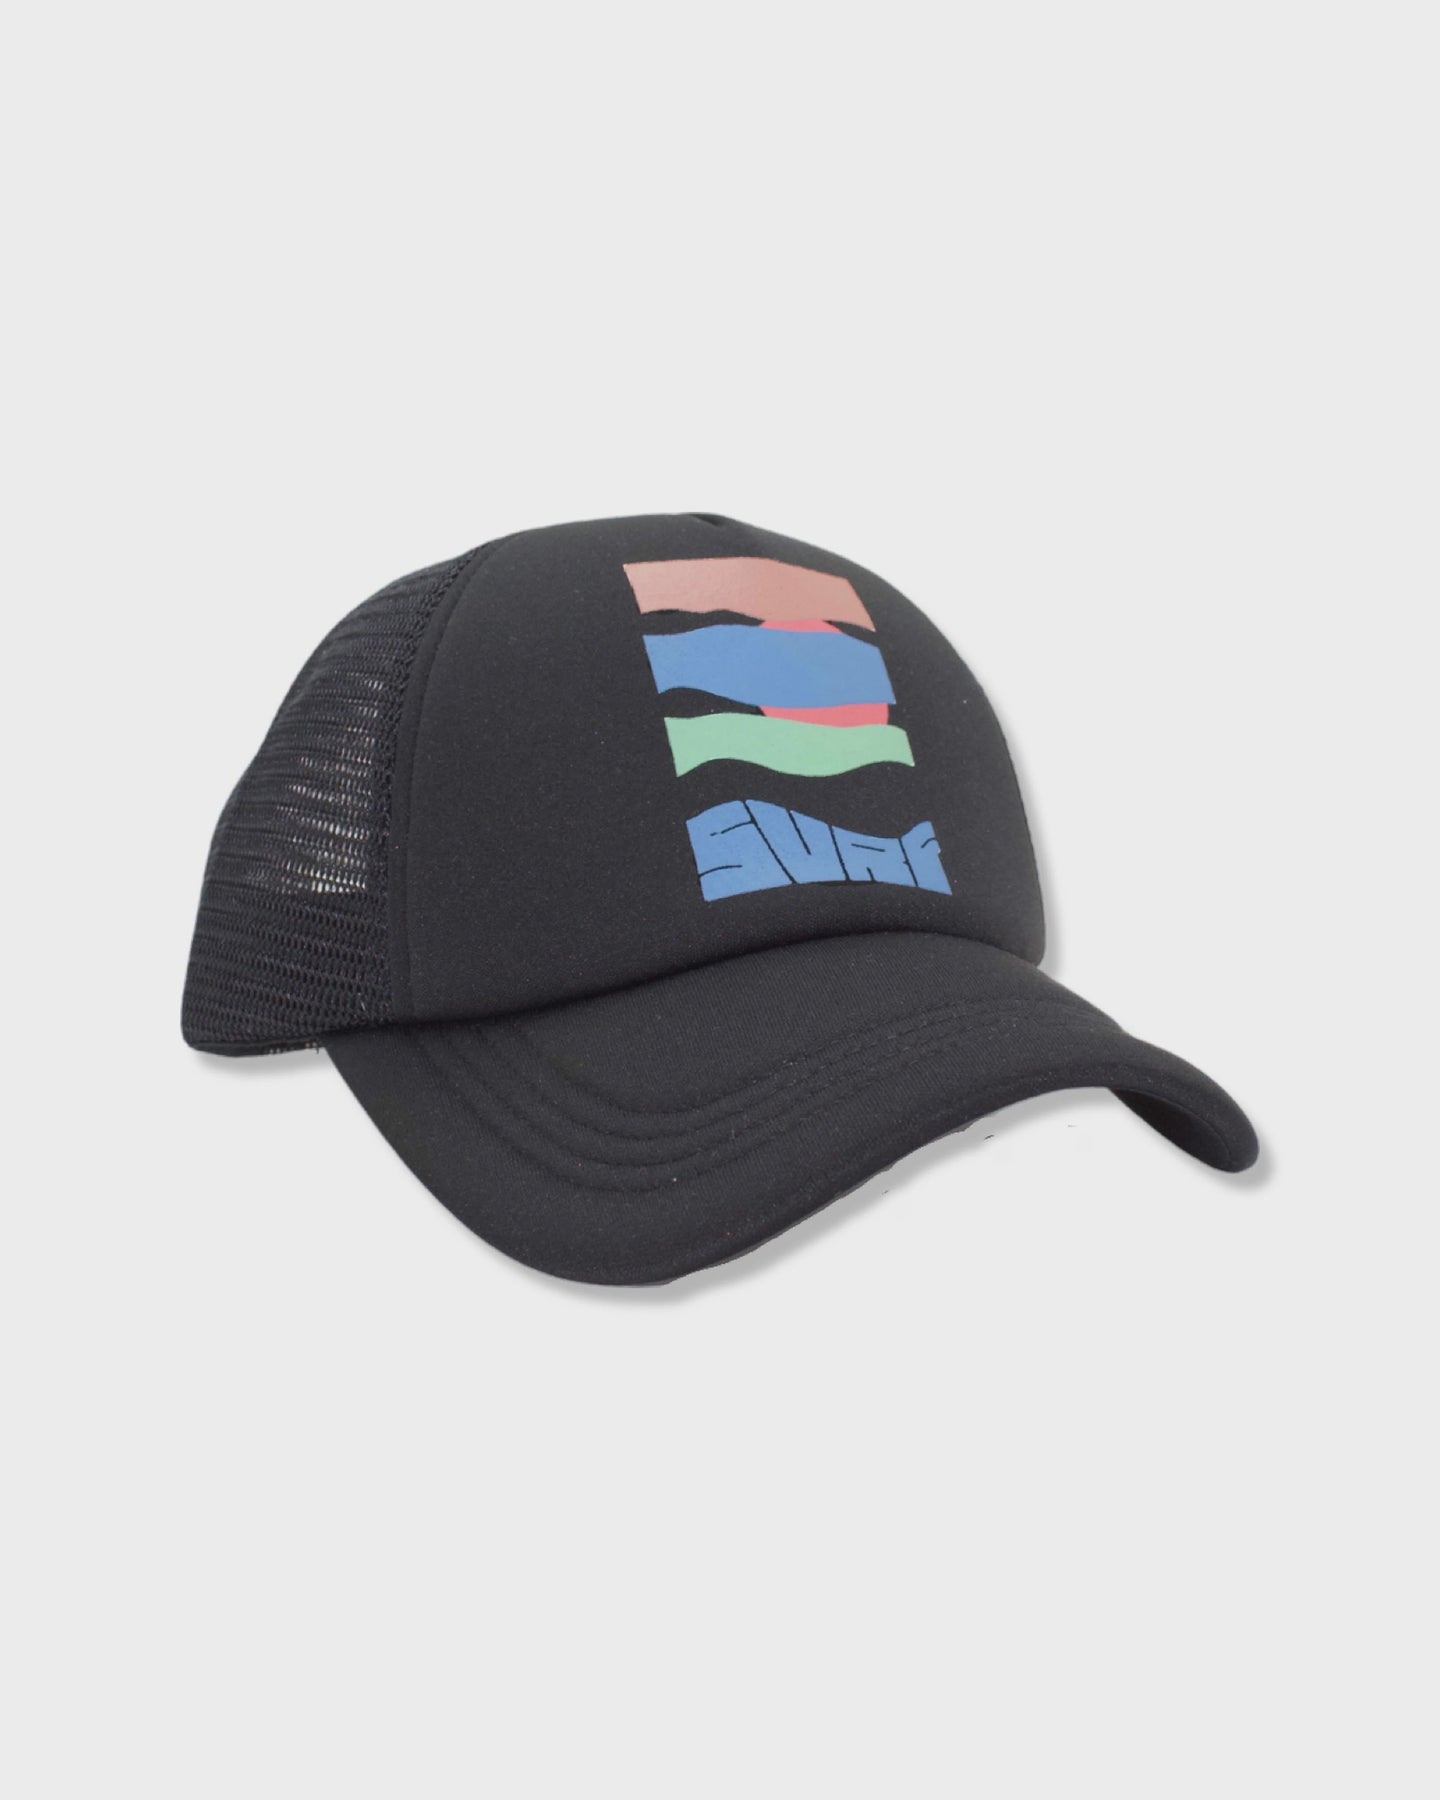 Feather 4 Arrow - Surf Trucker Hat/Black